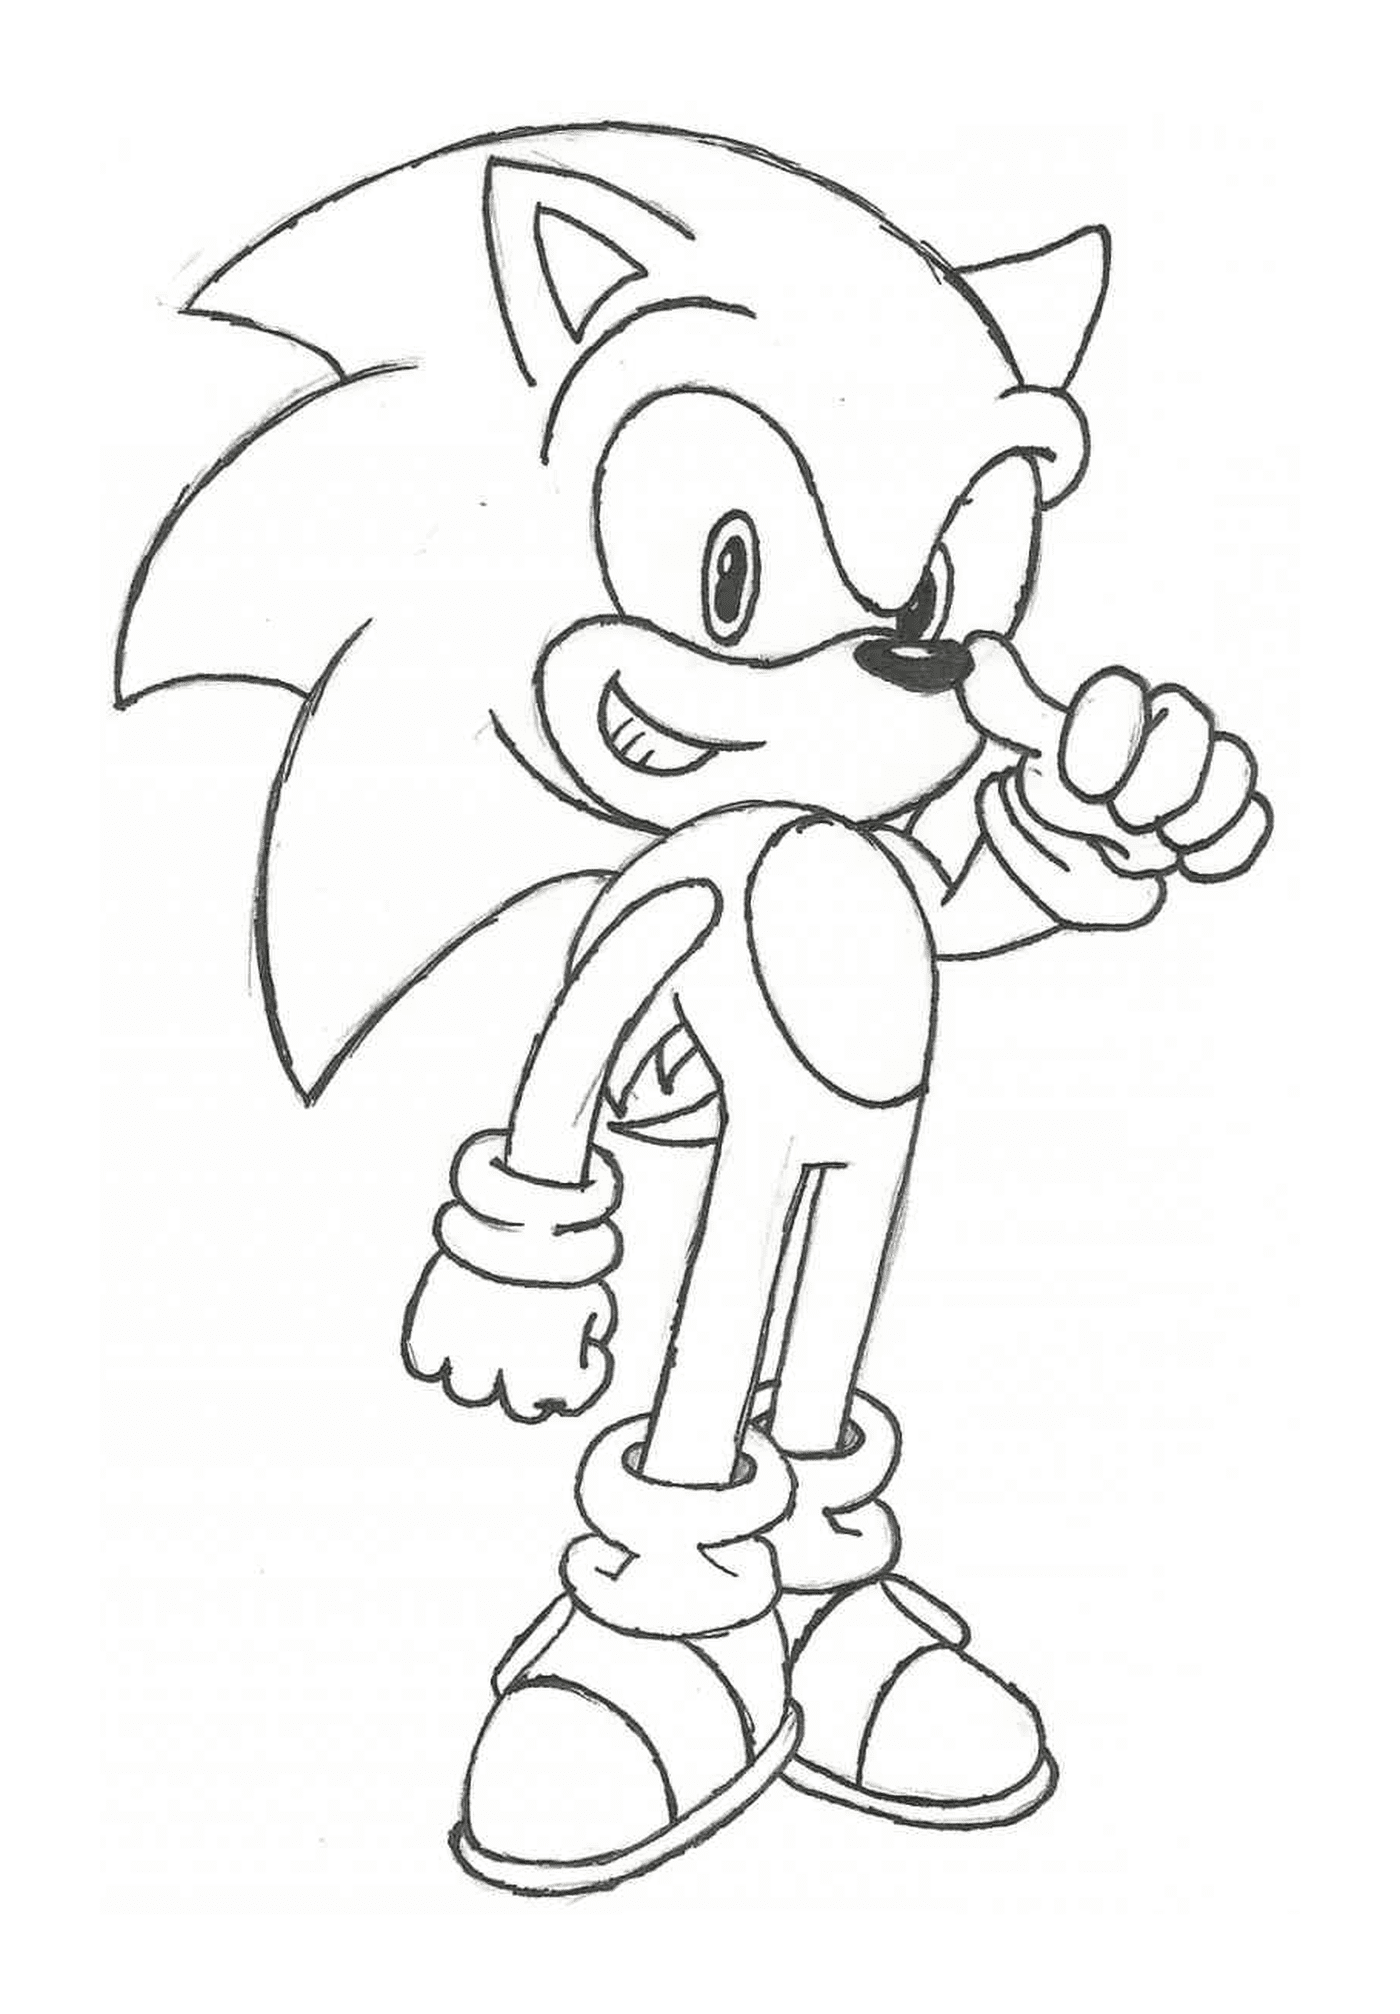  Sonic con una pose heroica 